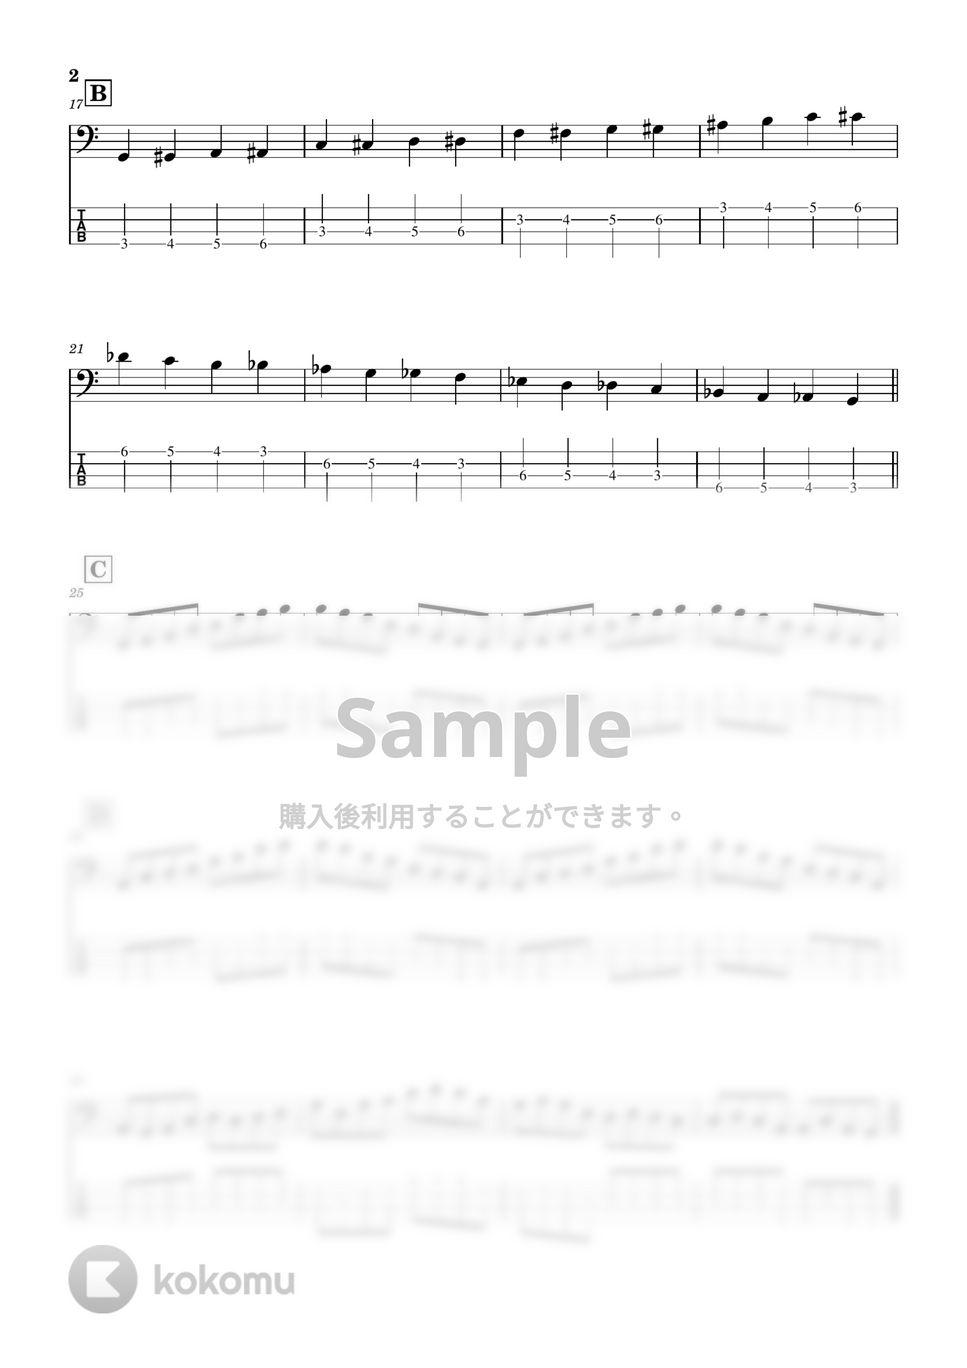 Zeo - ベース練習1 (Bass tab譜) by Zeo